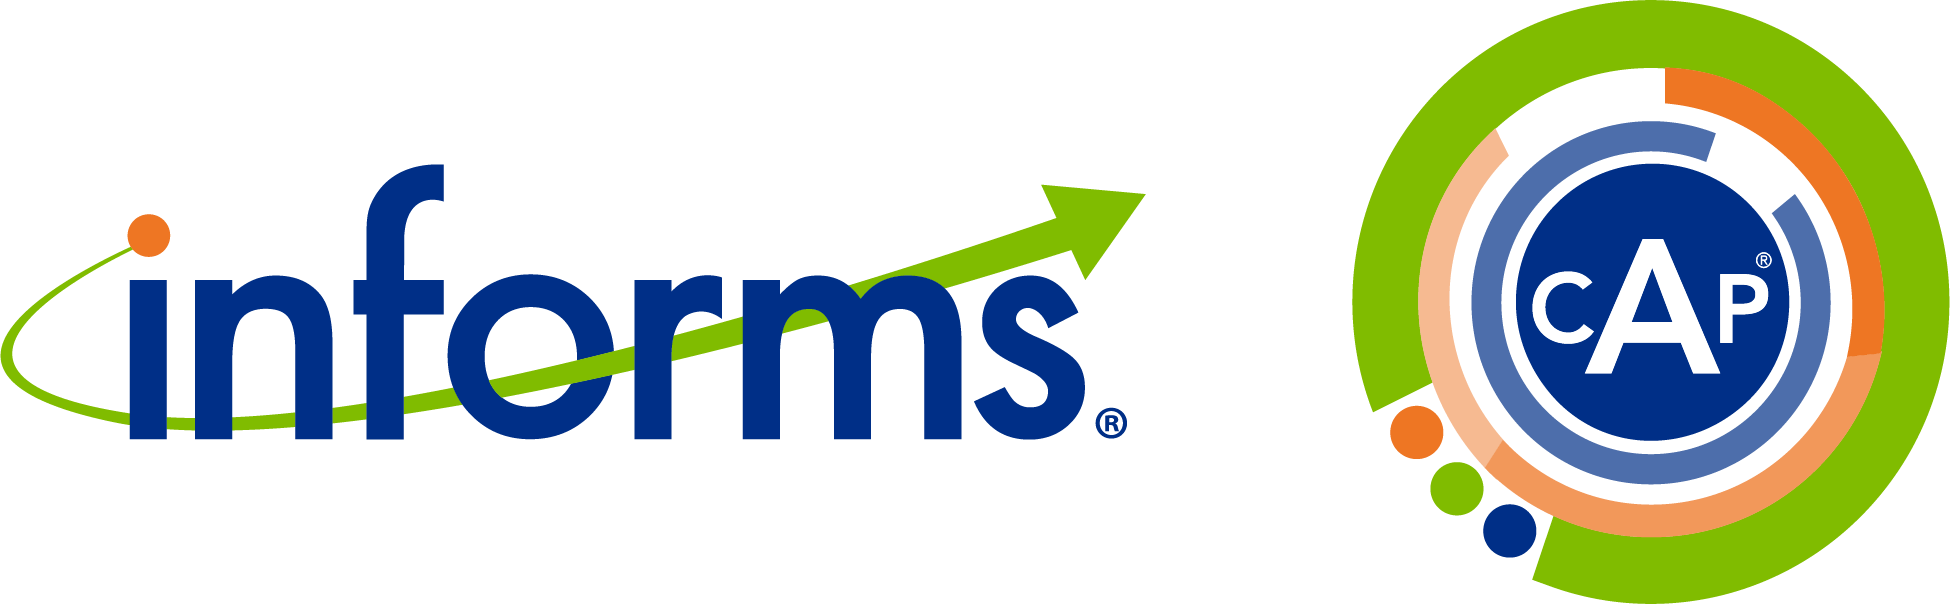 INFORMS logo